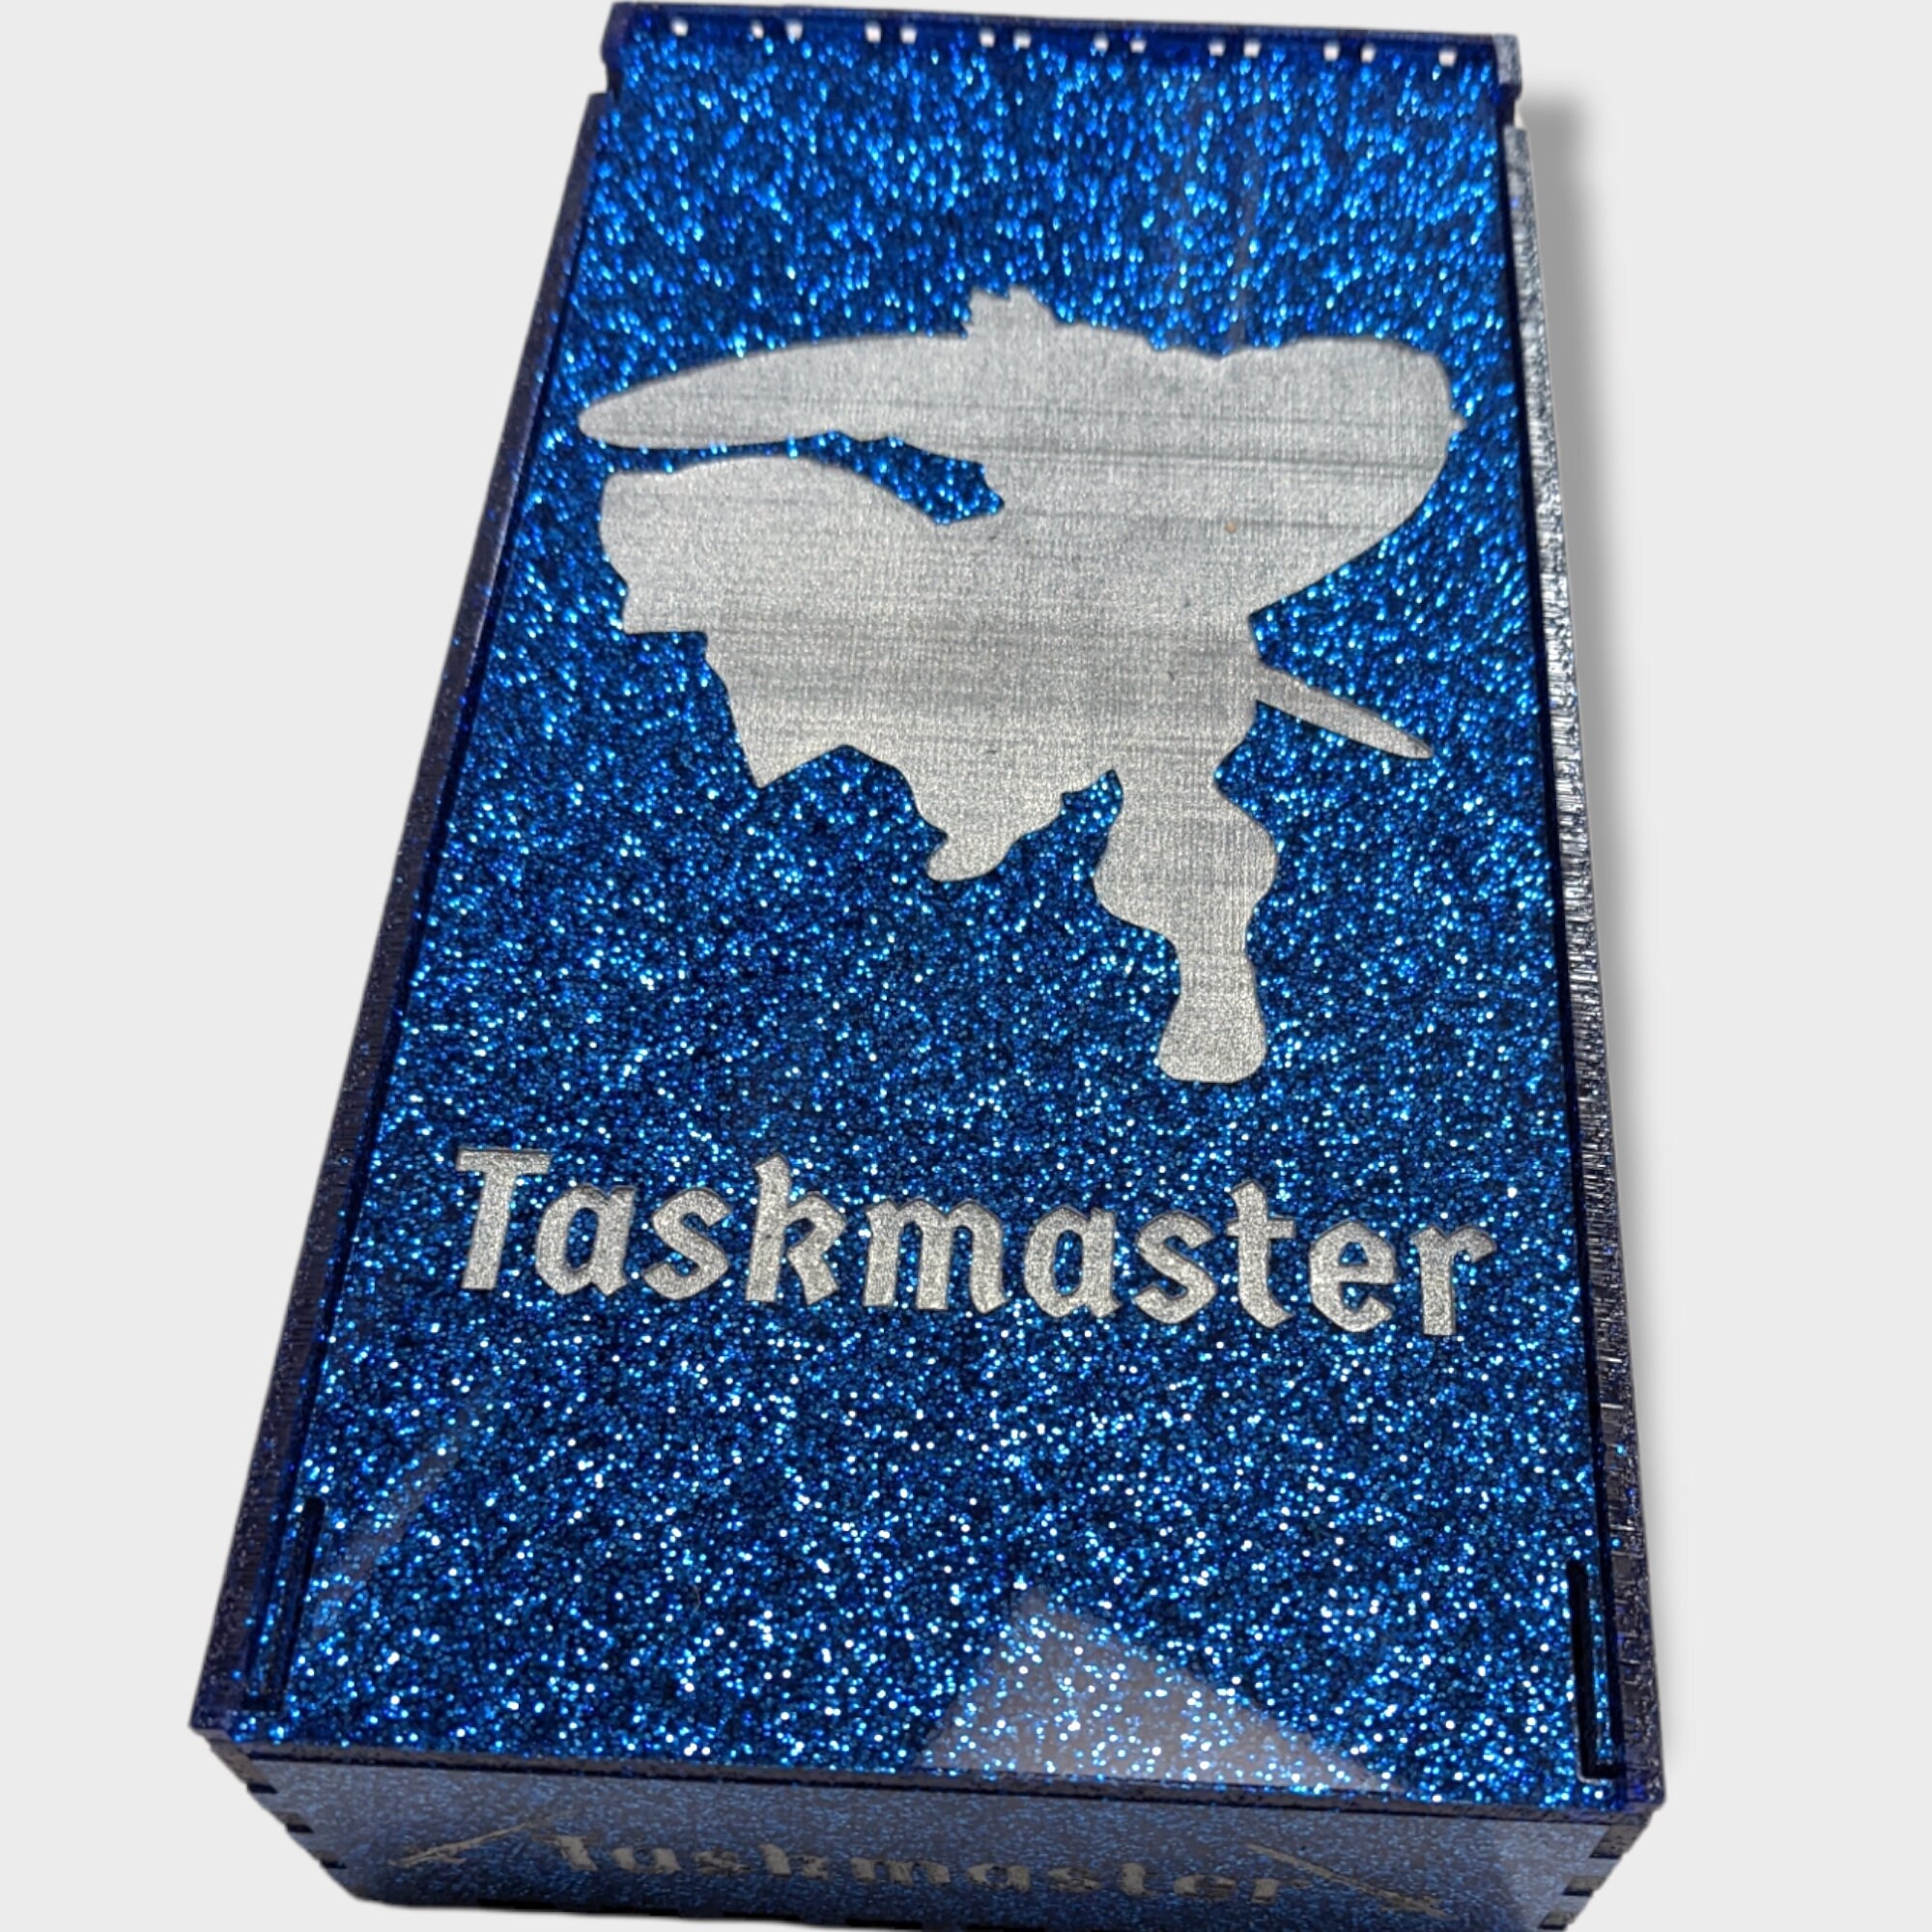 Taskmaster Box 